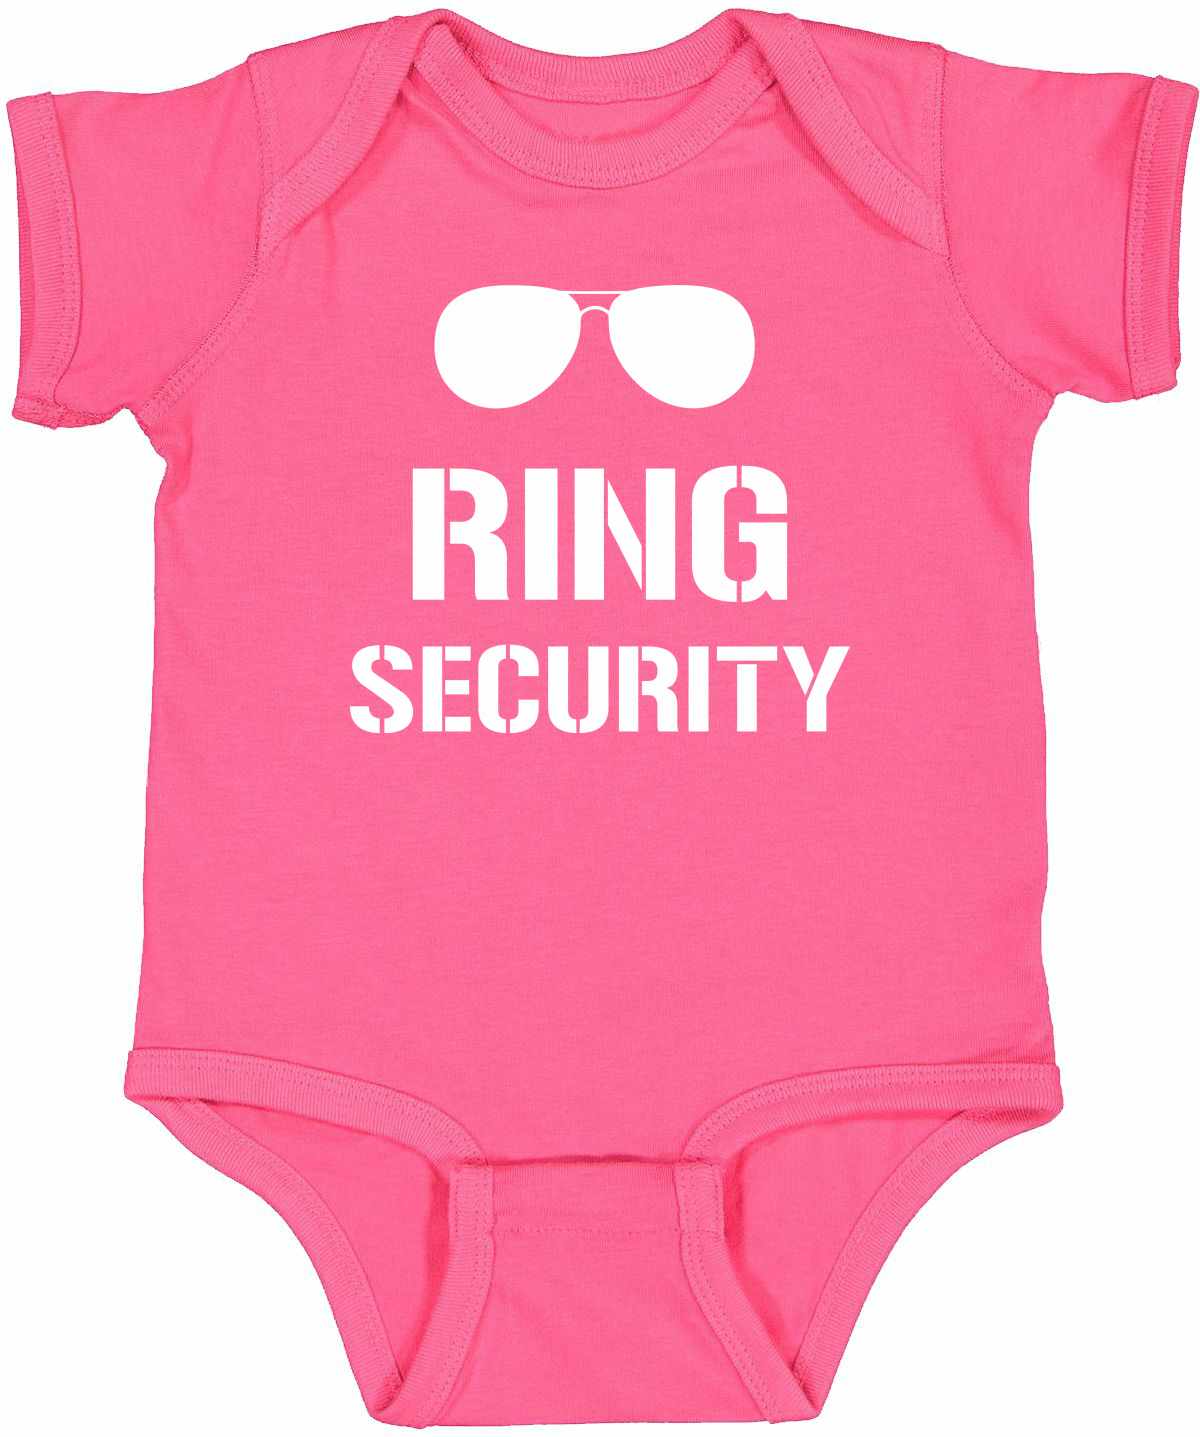 Ring Security on Infant BodySuit (#1011-10)